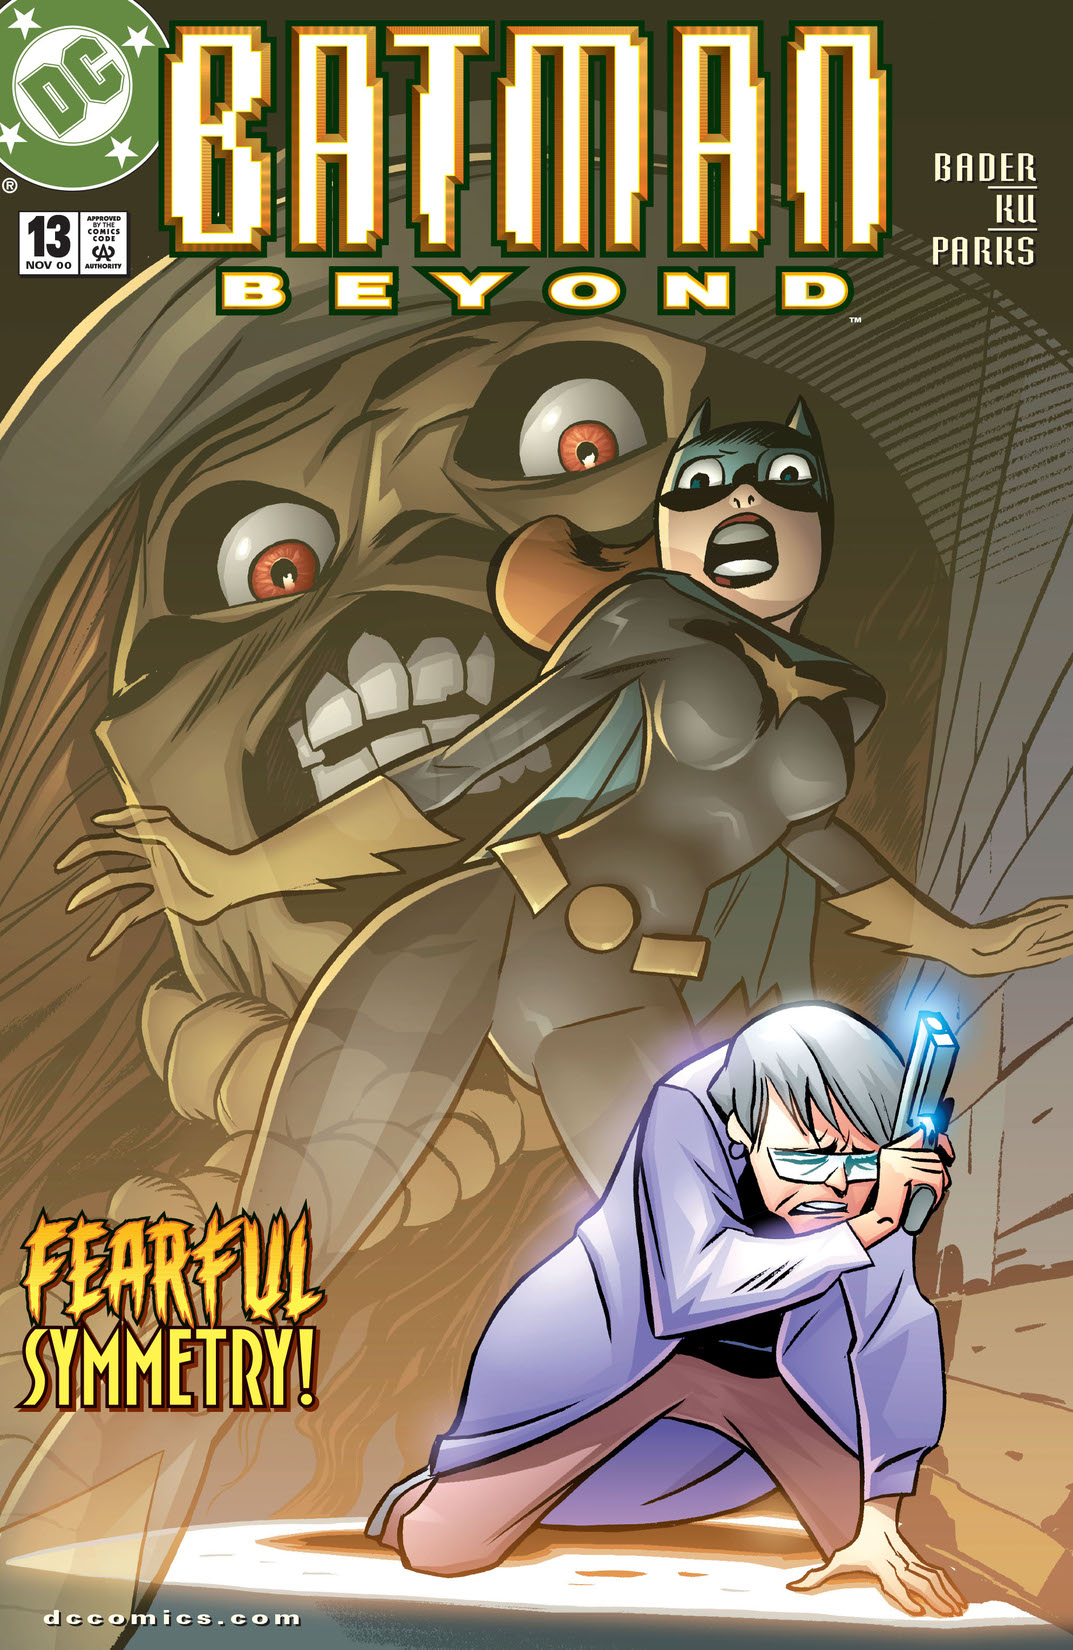 Batman Beyond (1999-) #13 preview images